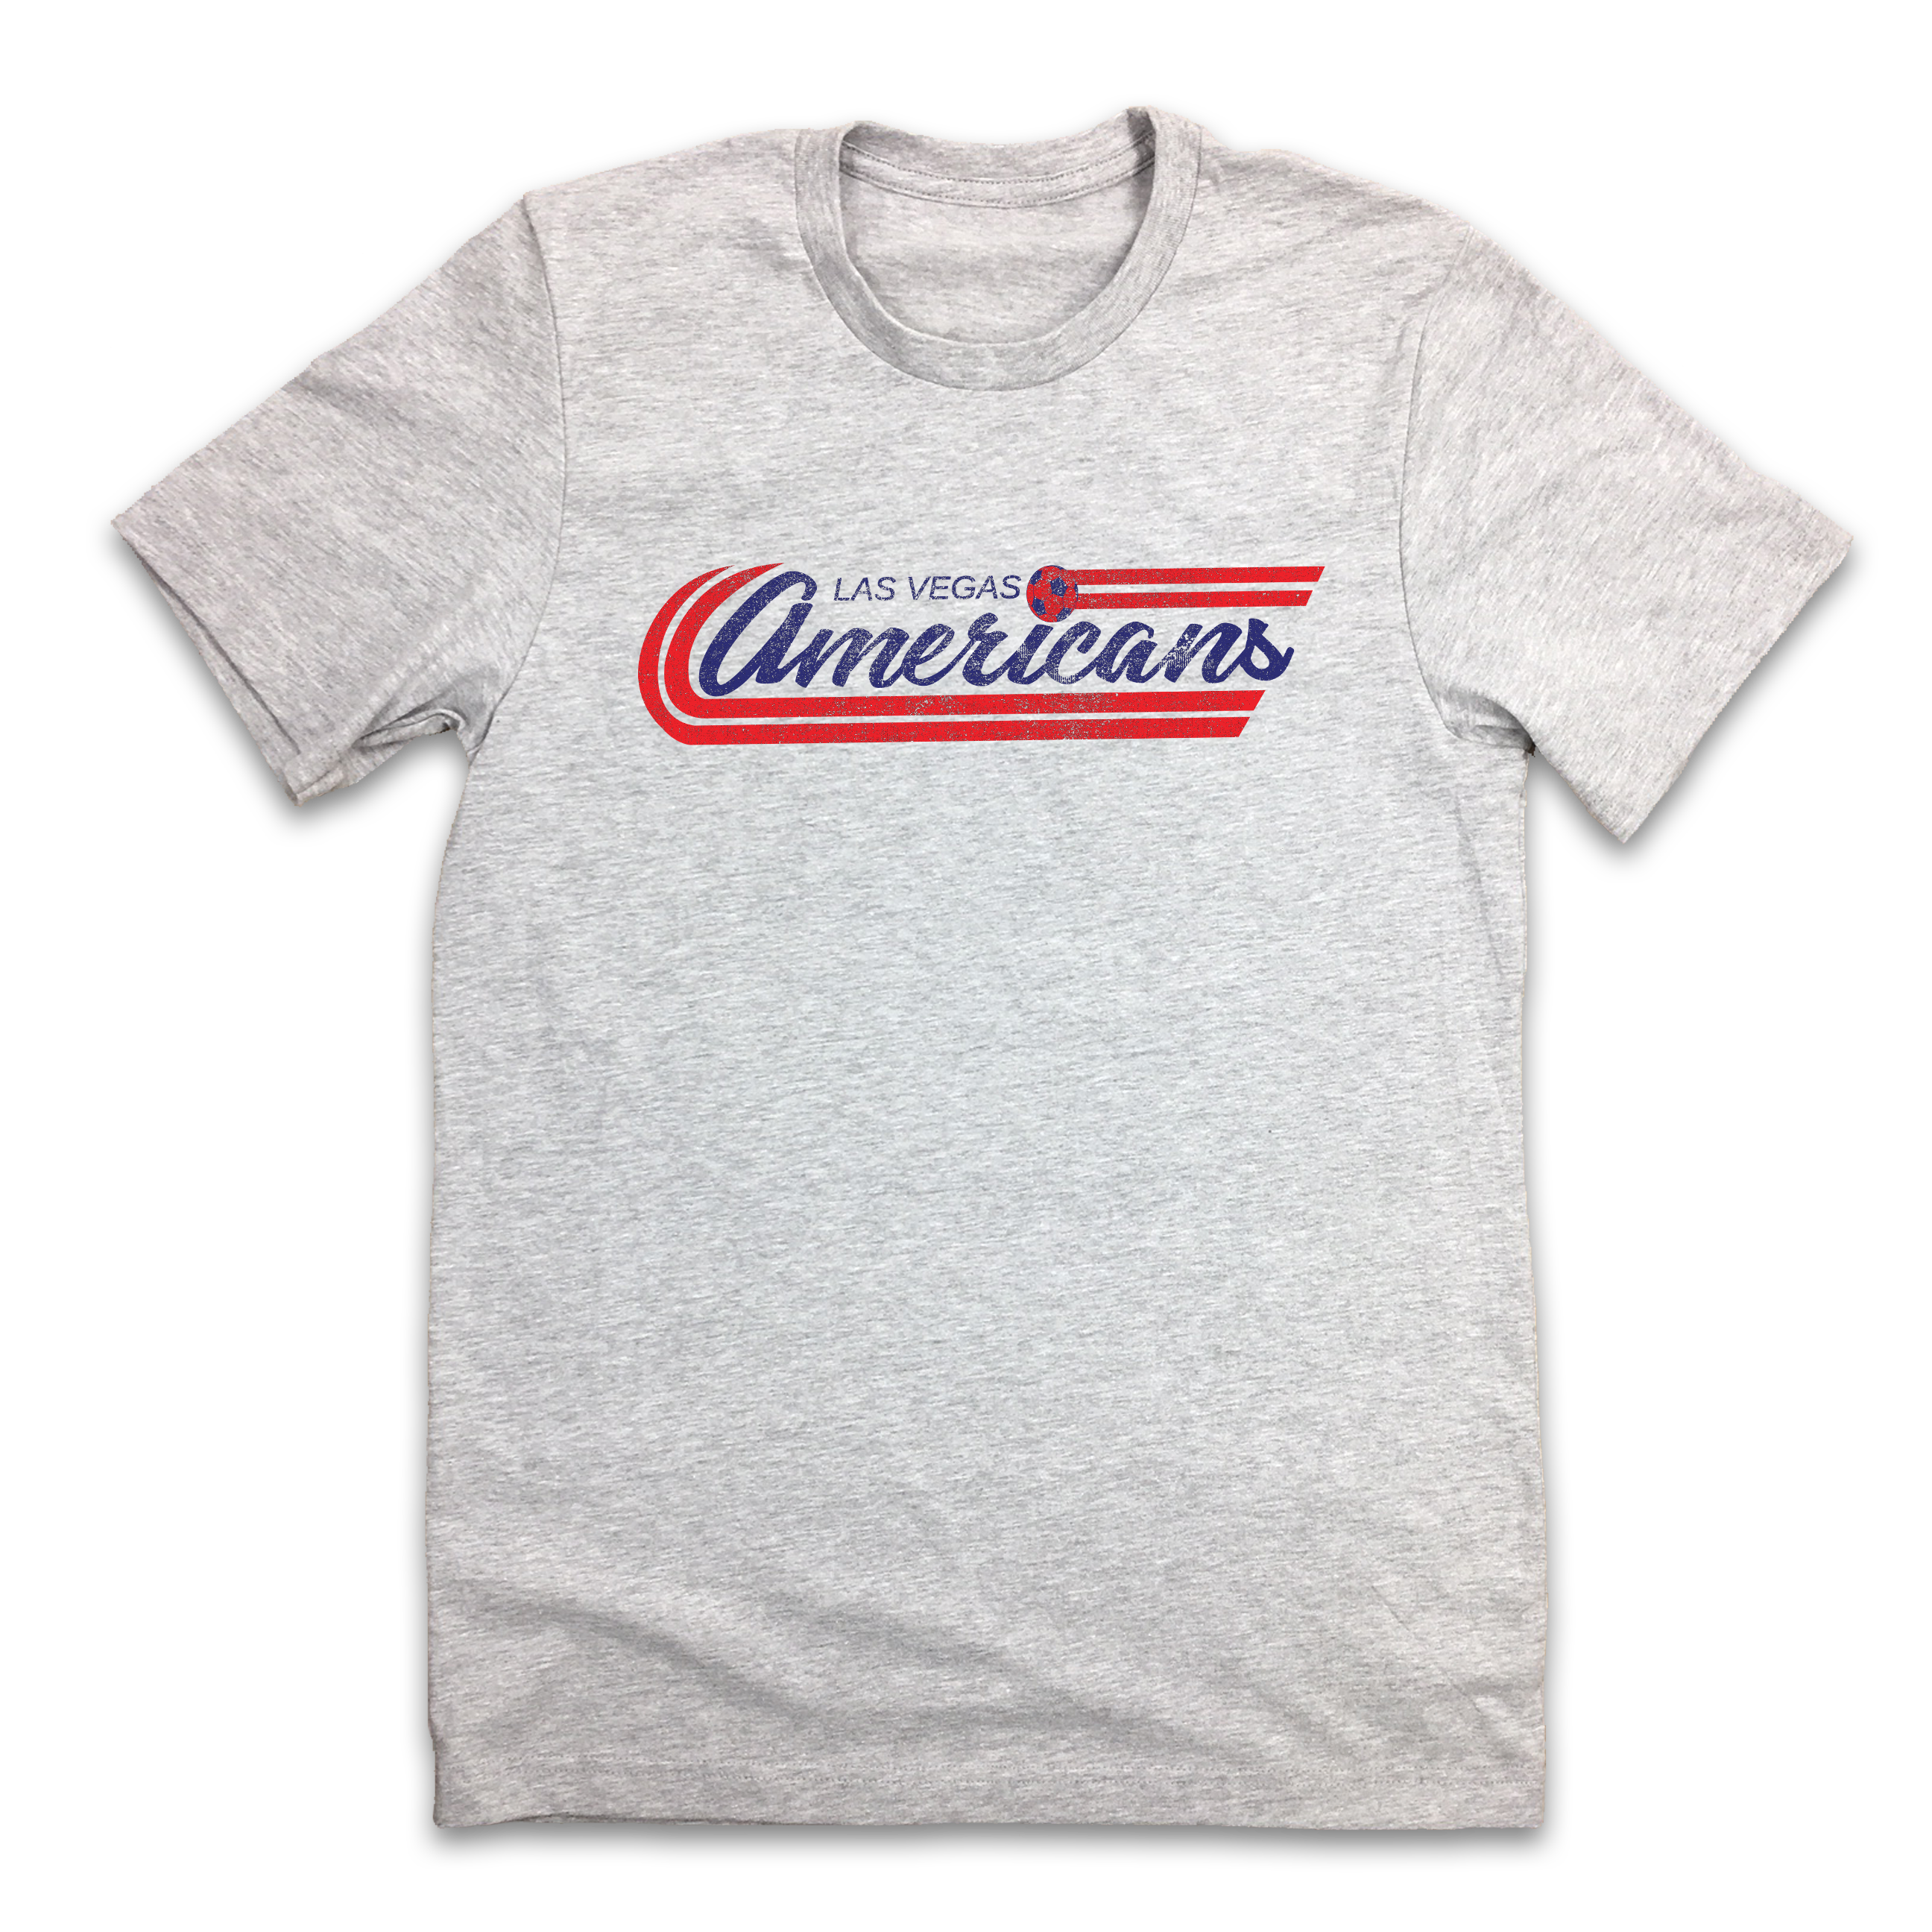 Las Vegas Americans - Old School Shirts- Retro Sports T Shirts